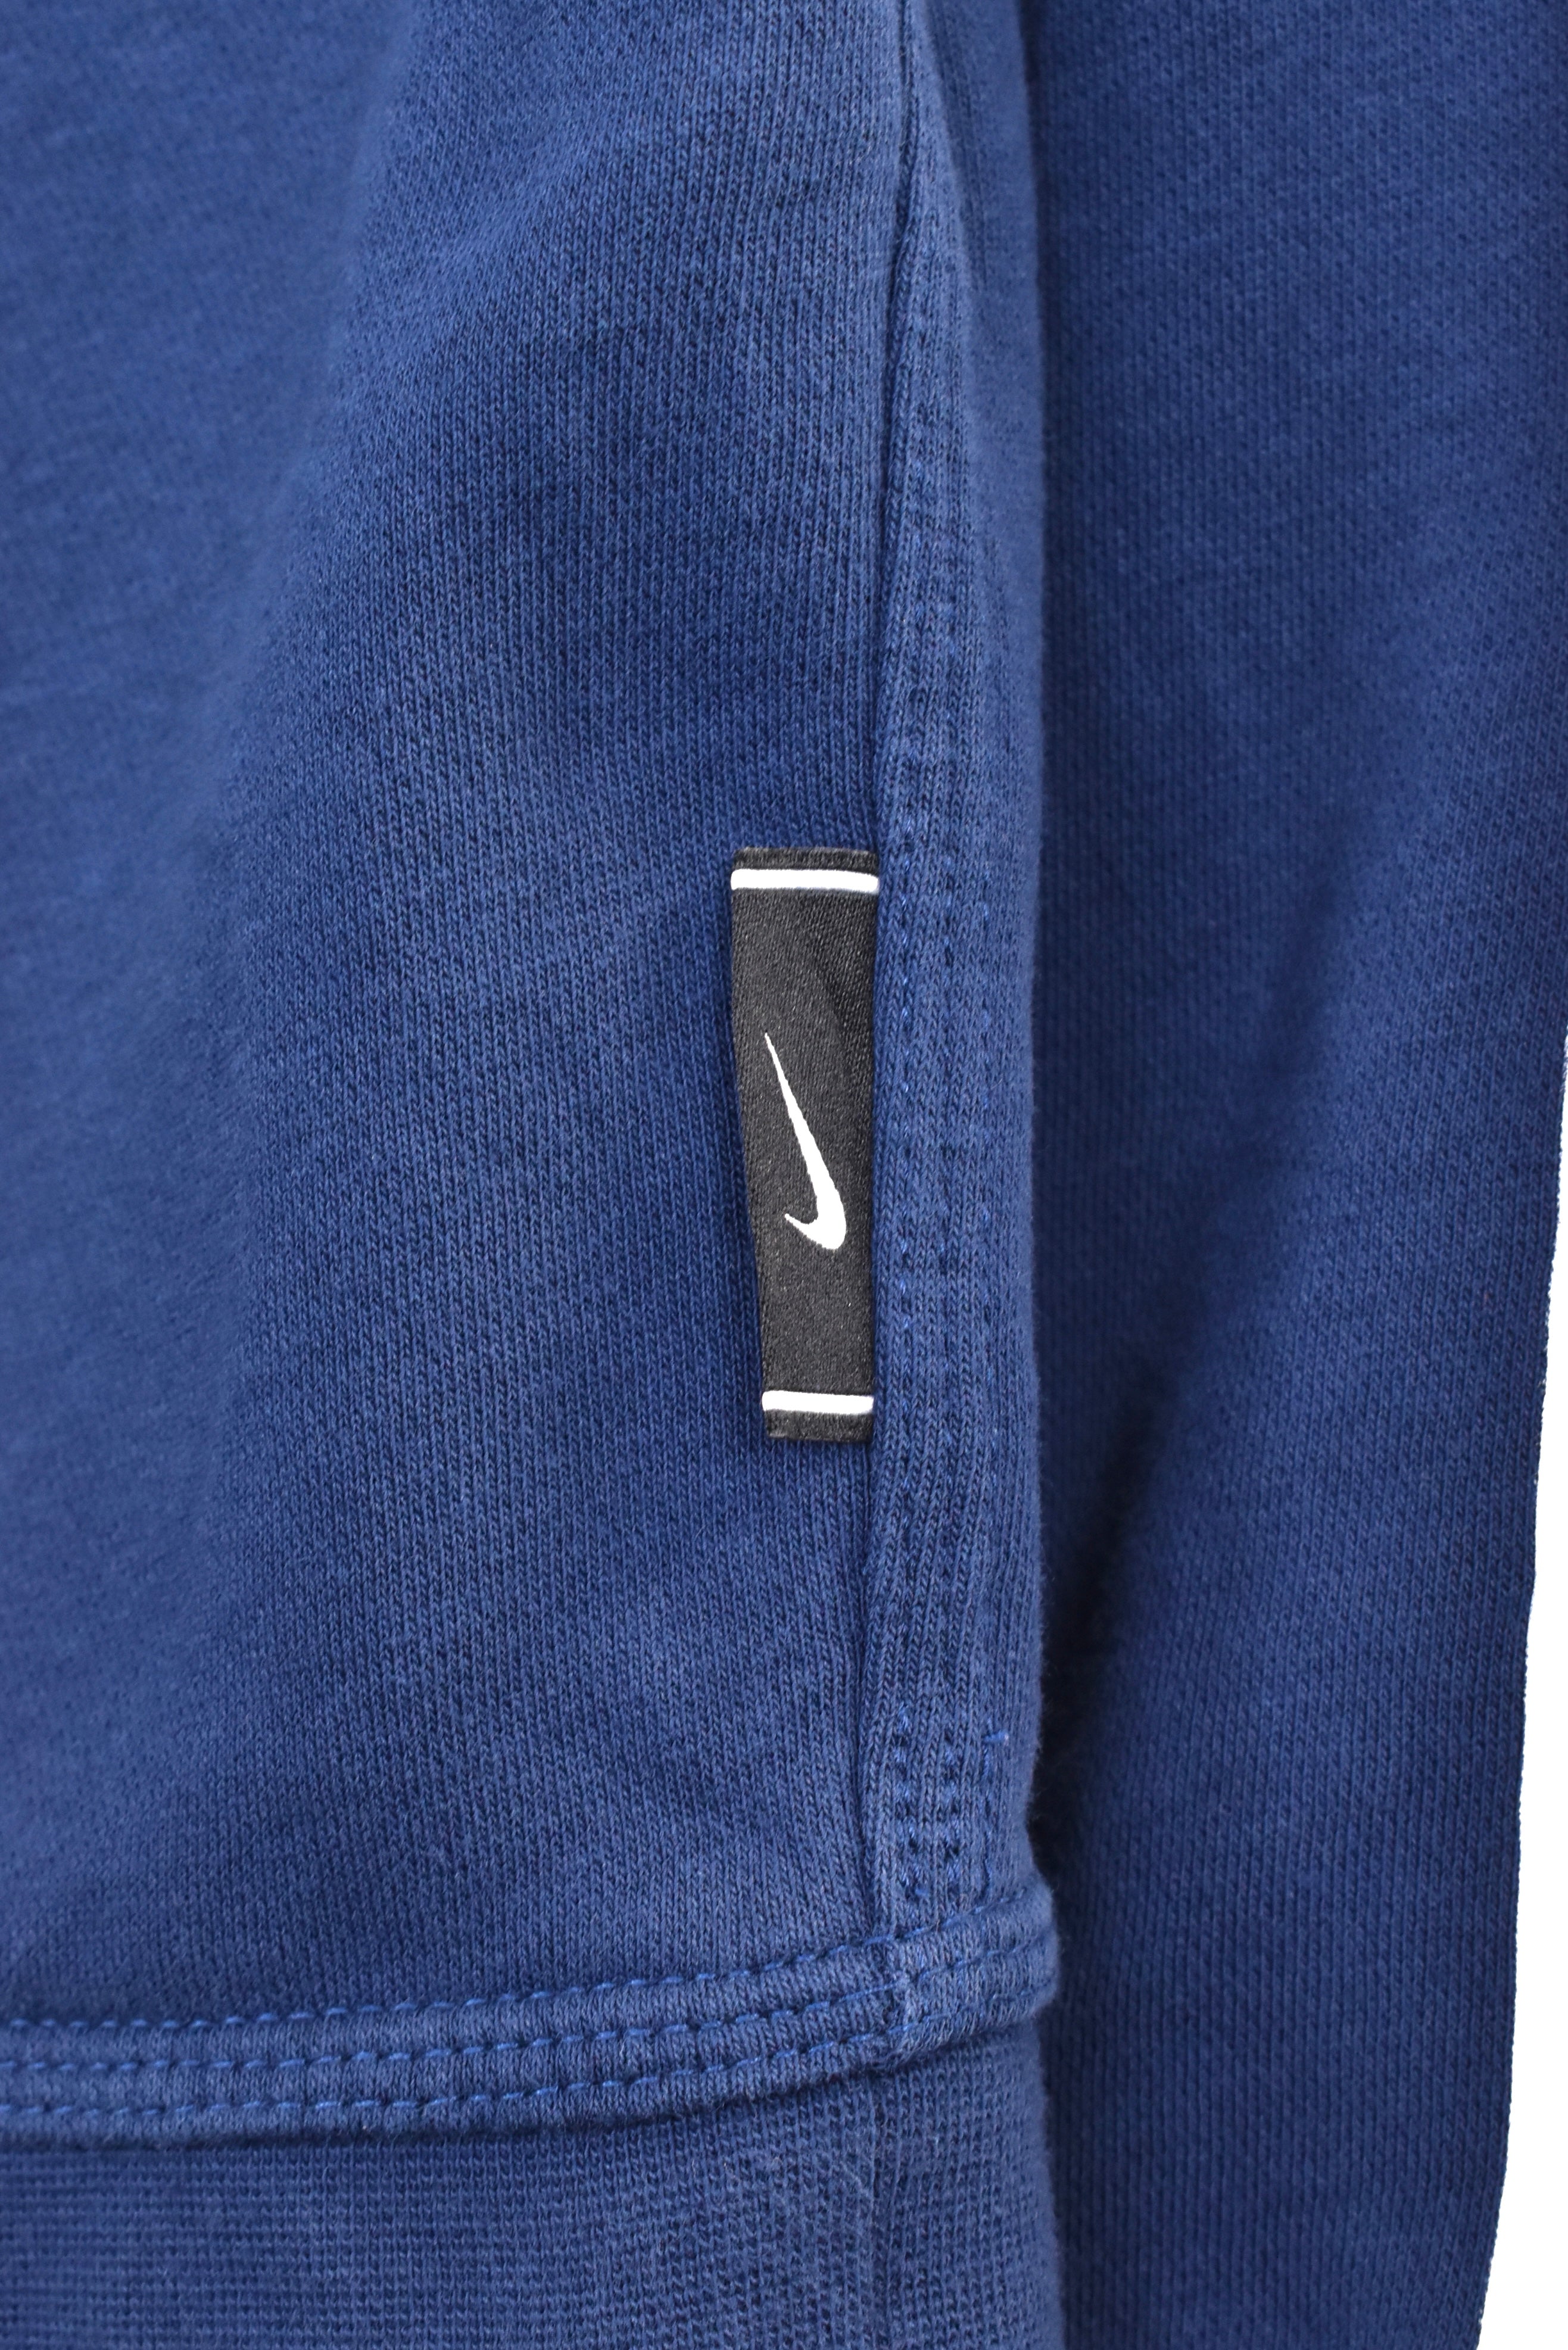 Vintage Nike sweatshirt, blue Paris graphic crewneck - AU Medium NIKE